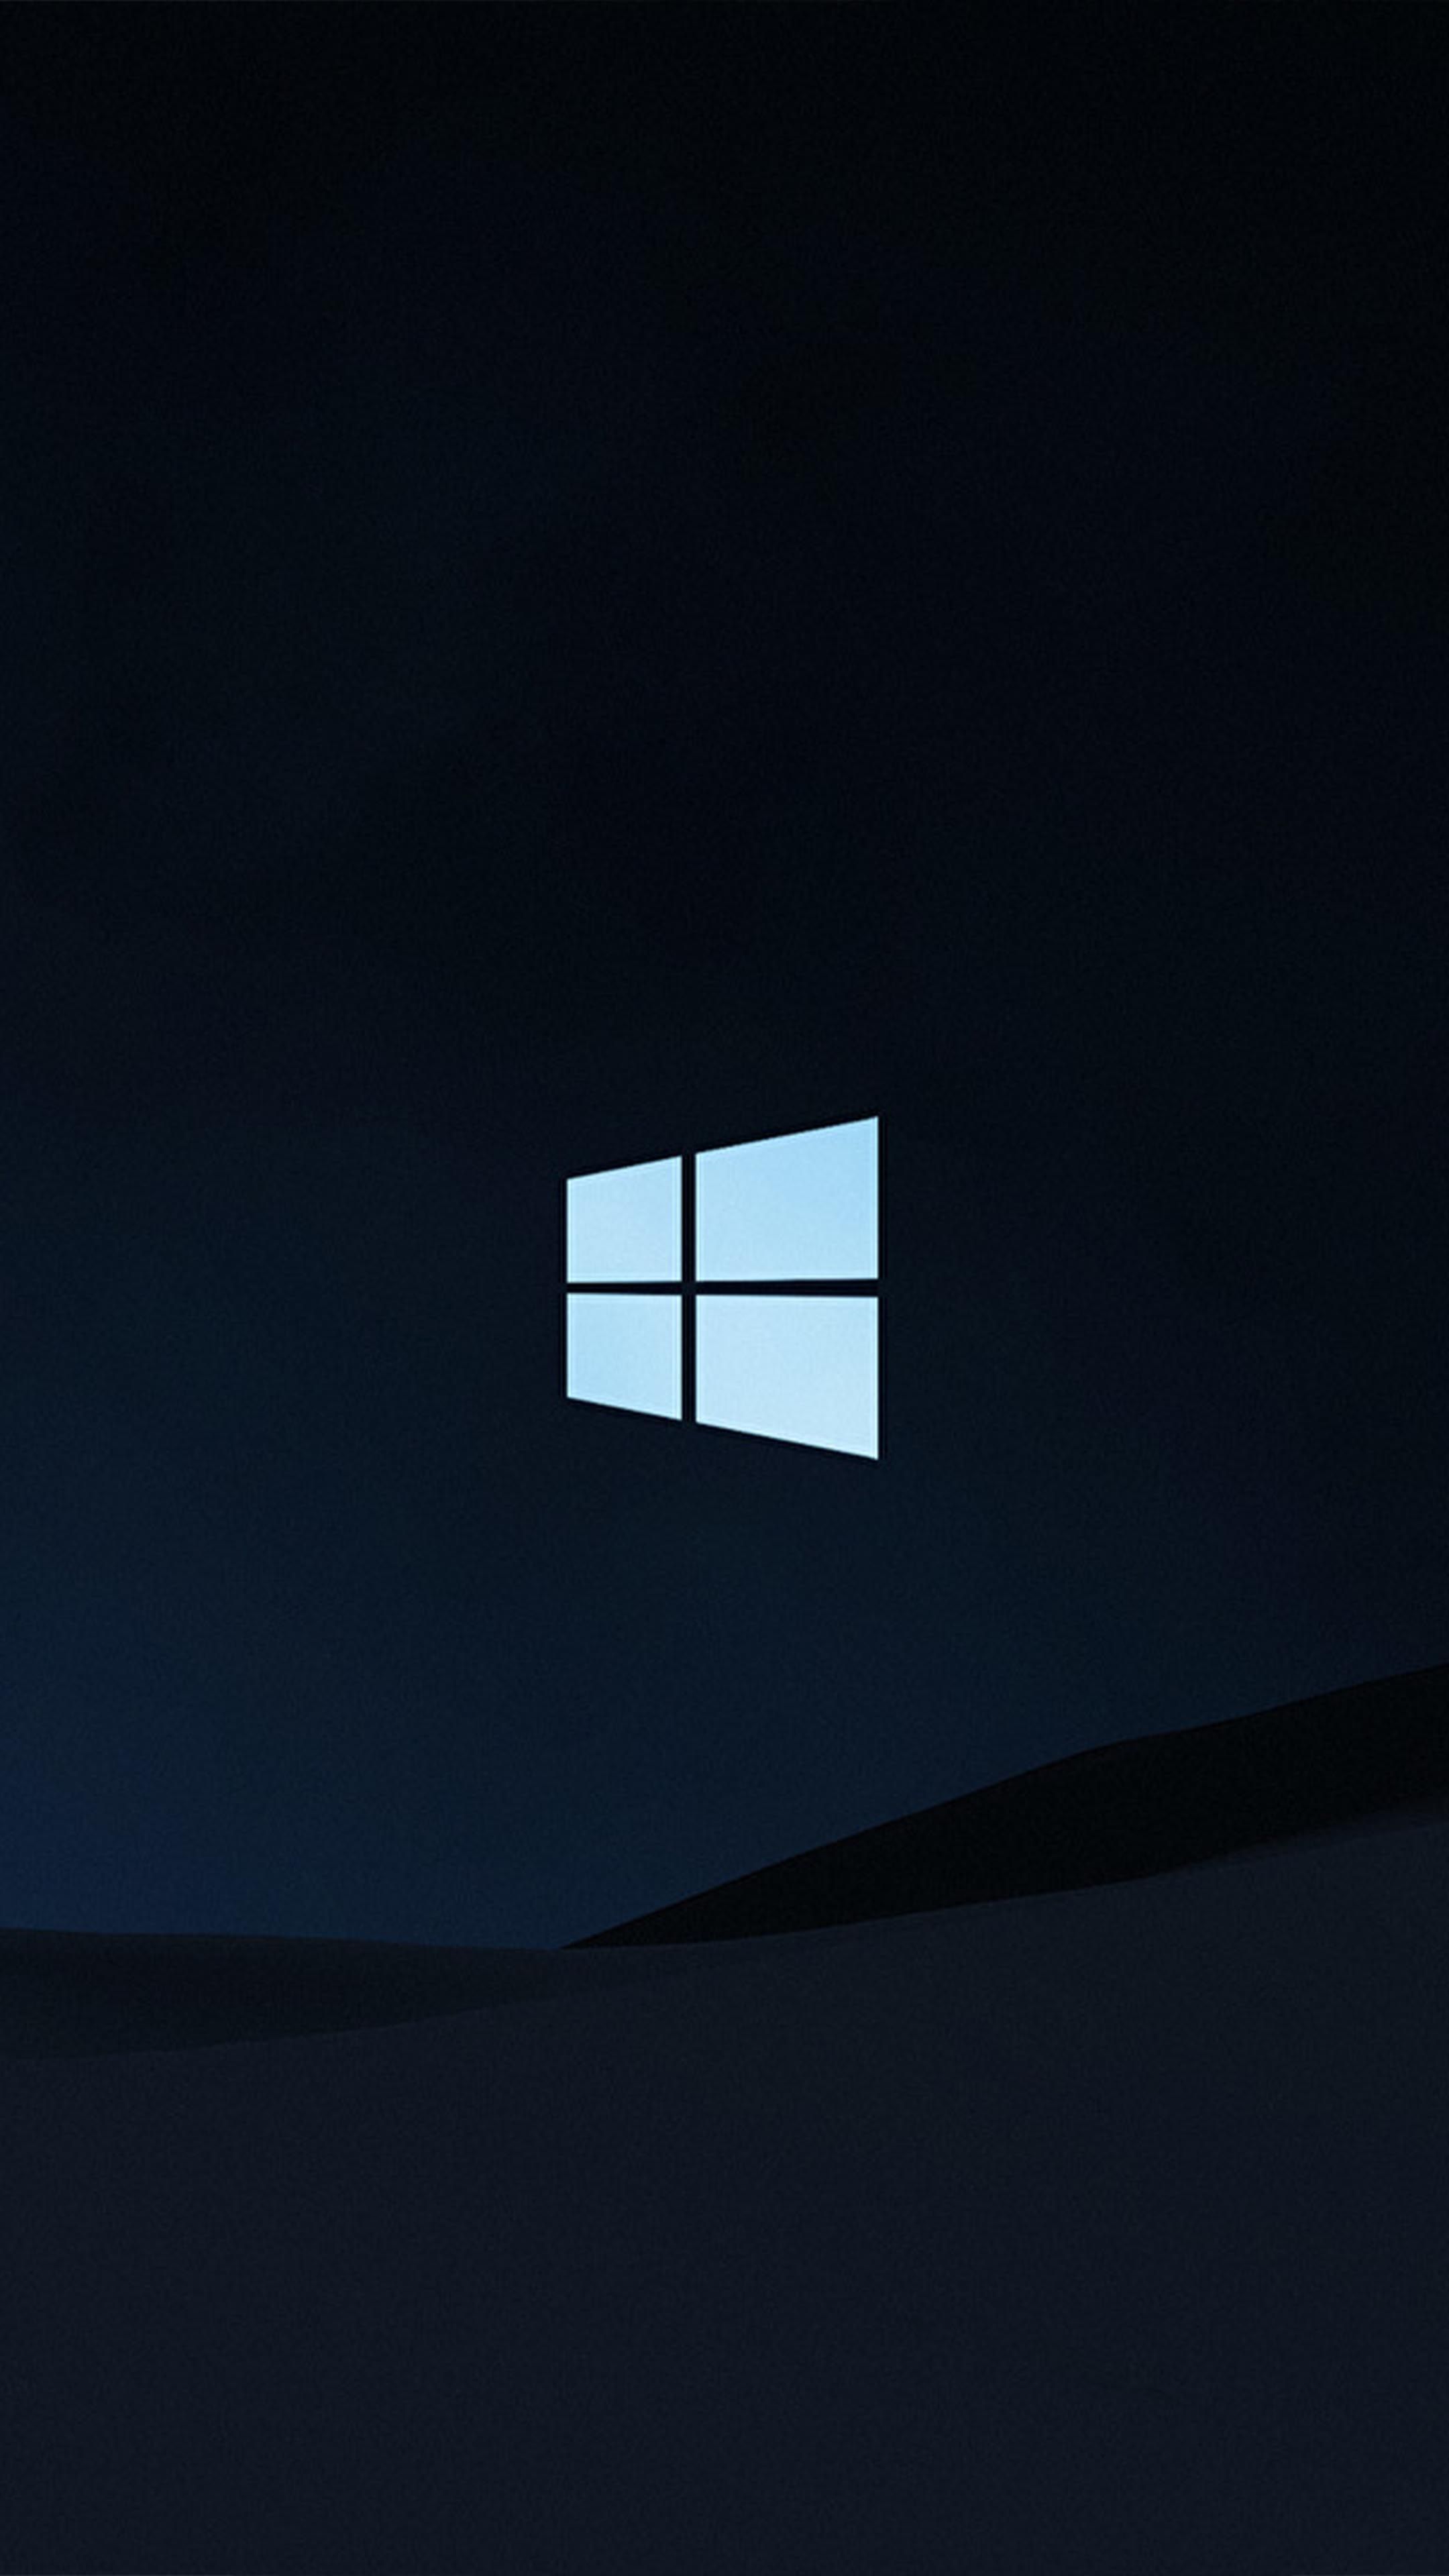 Windows 10 Logo Dark Background 4K Ultra HD Mobile Wallpaper. Windows 10 logo, Dark background, Windows 10 background